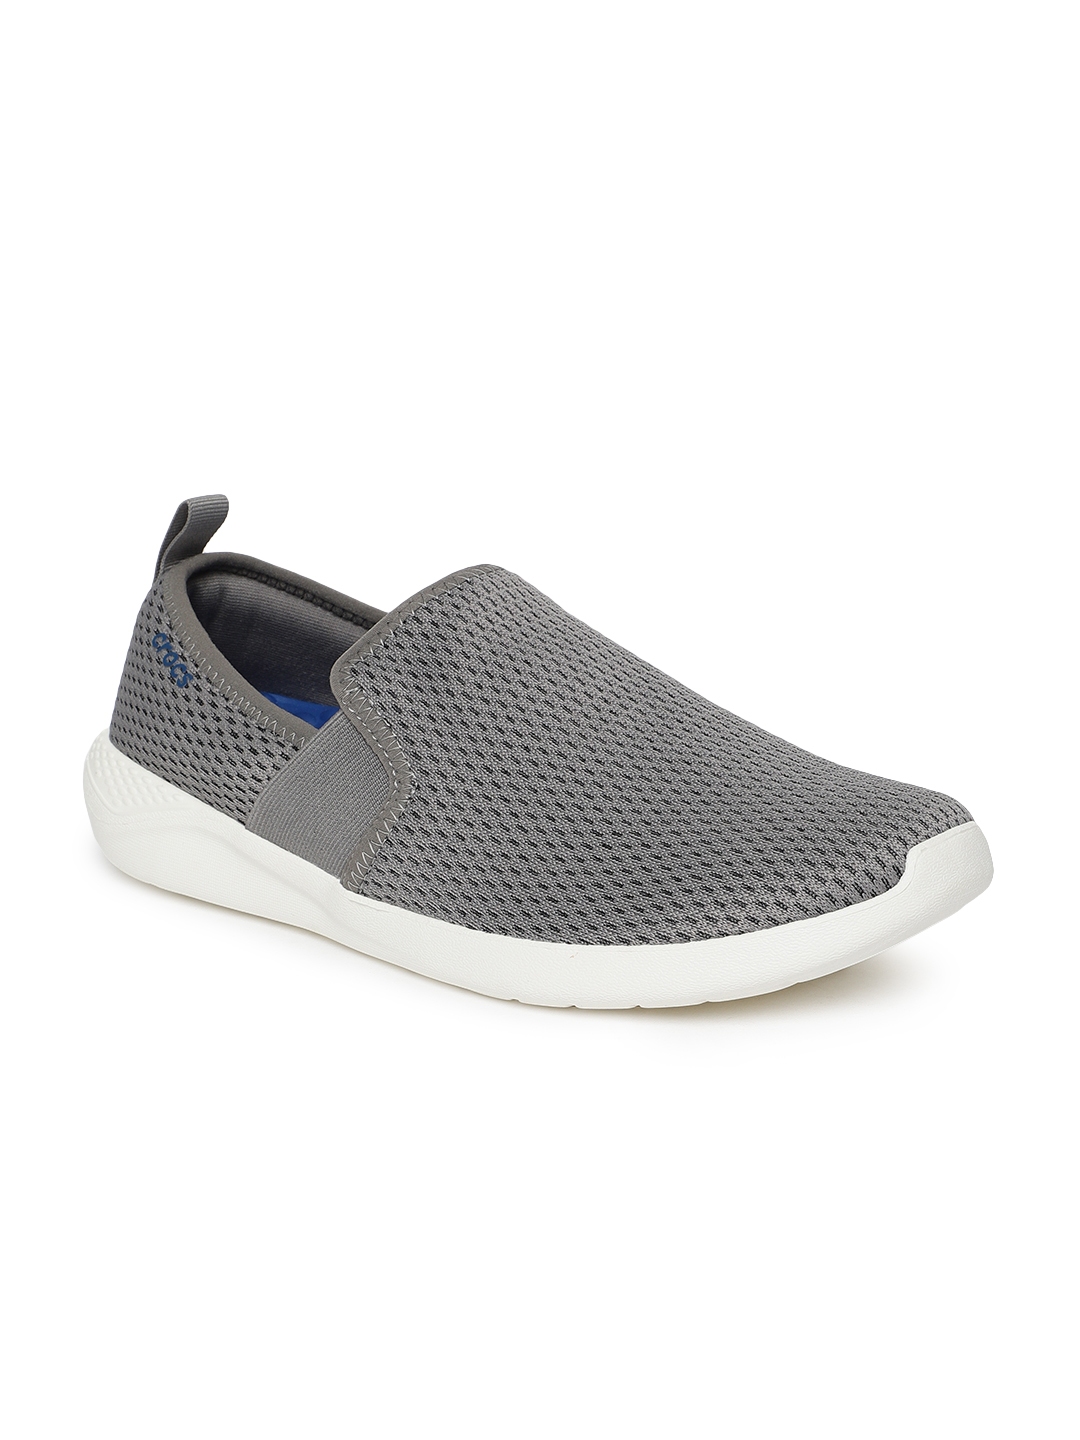 Buy Crocs Literide Men Grey Slip On Sneakers - Casual Shoes for Men ...